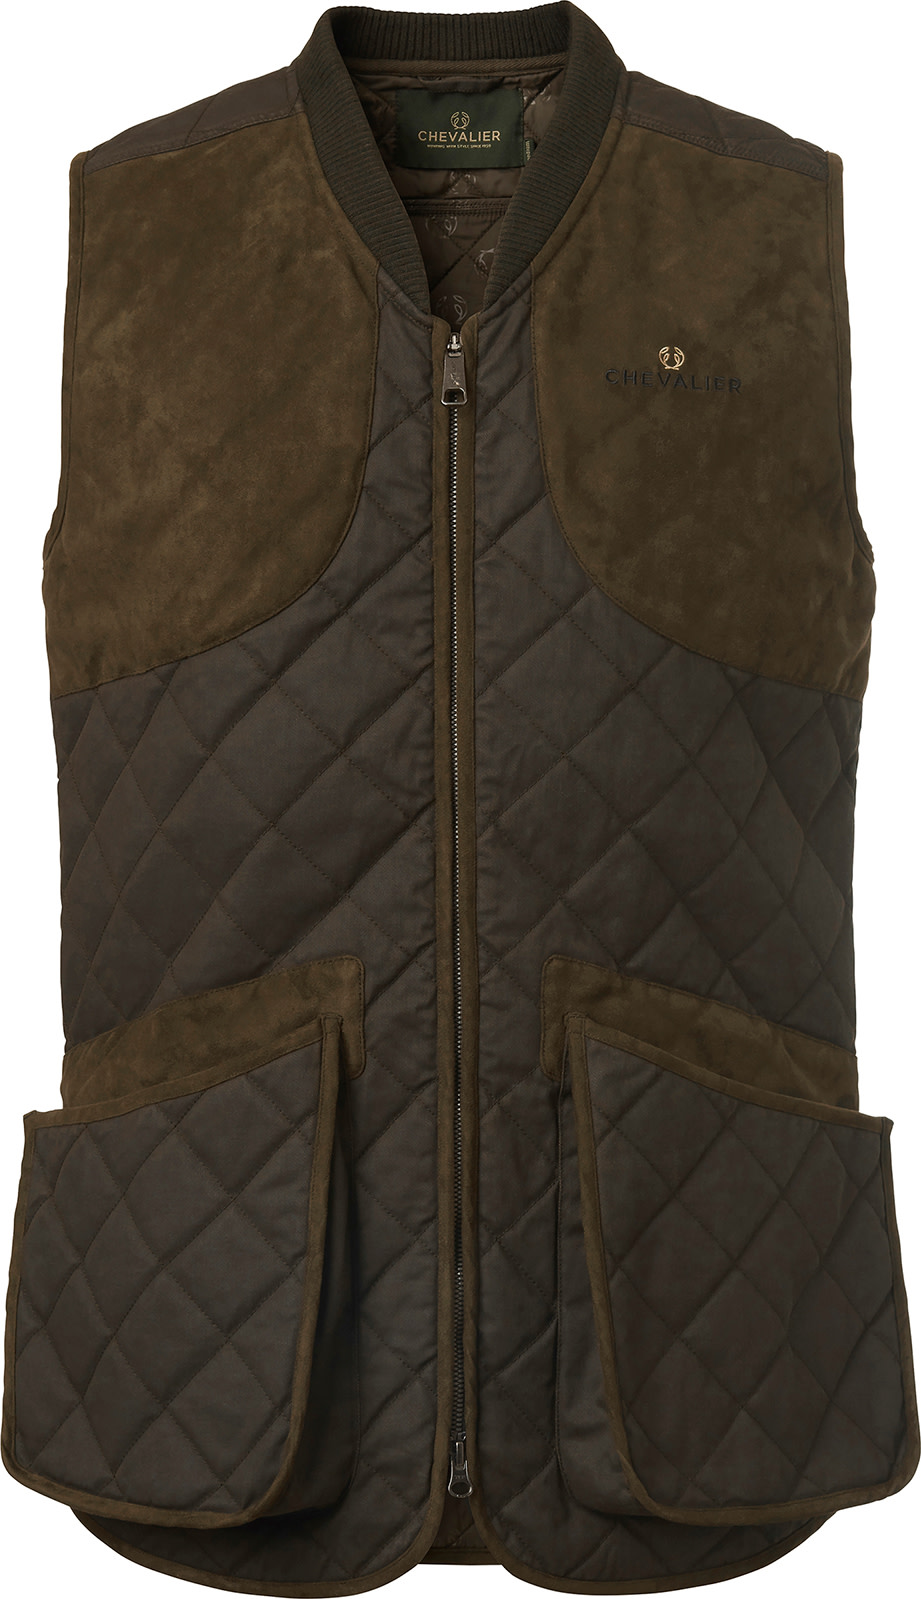 Chevalier Men’s Vintage Shooting Vest  Leather Brown